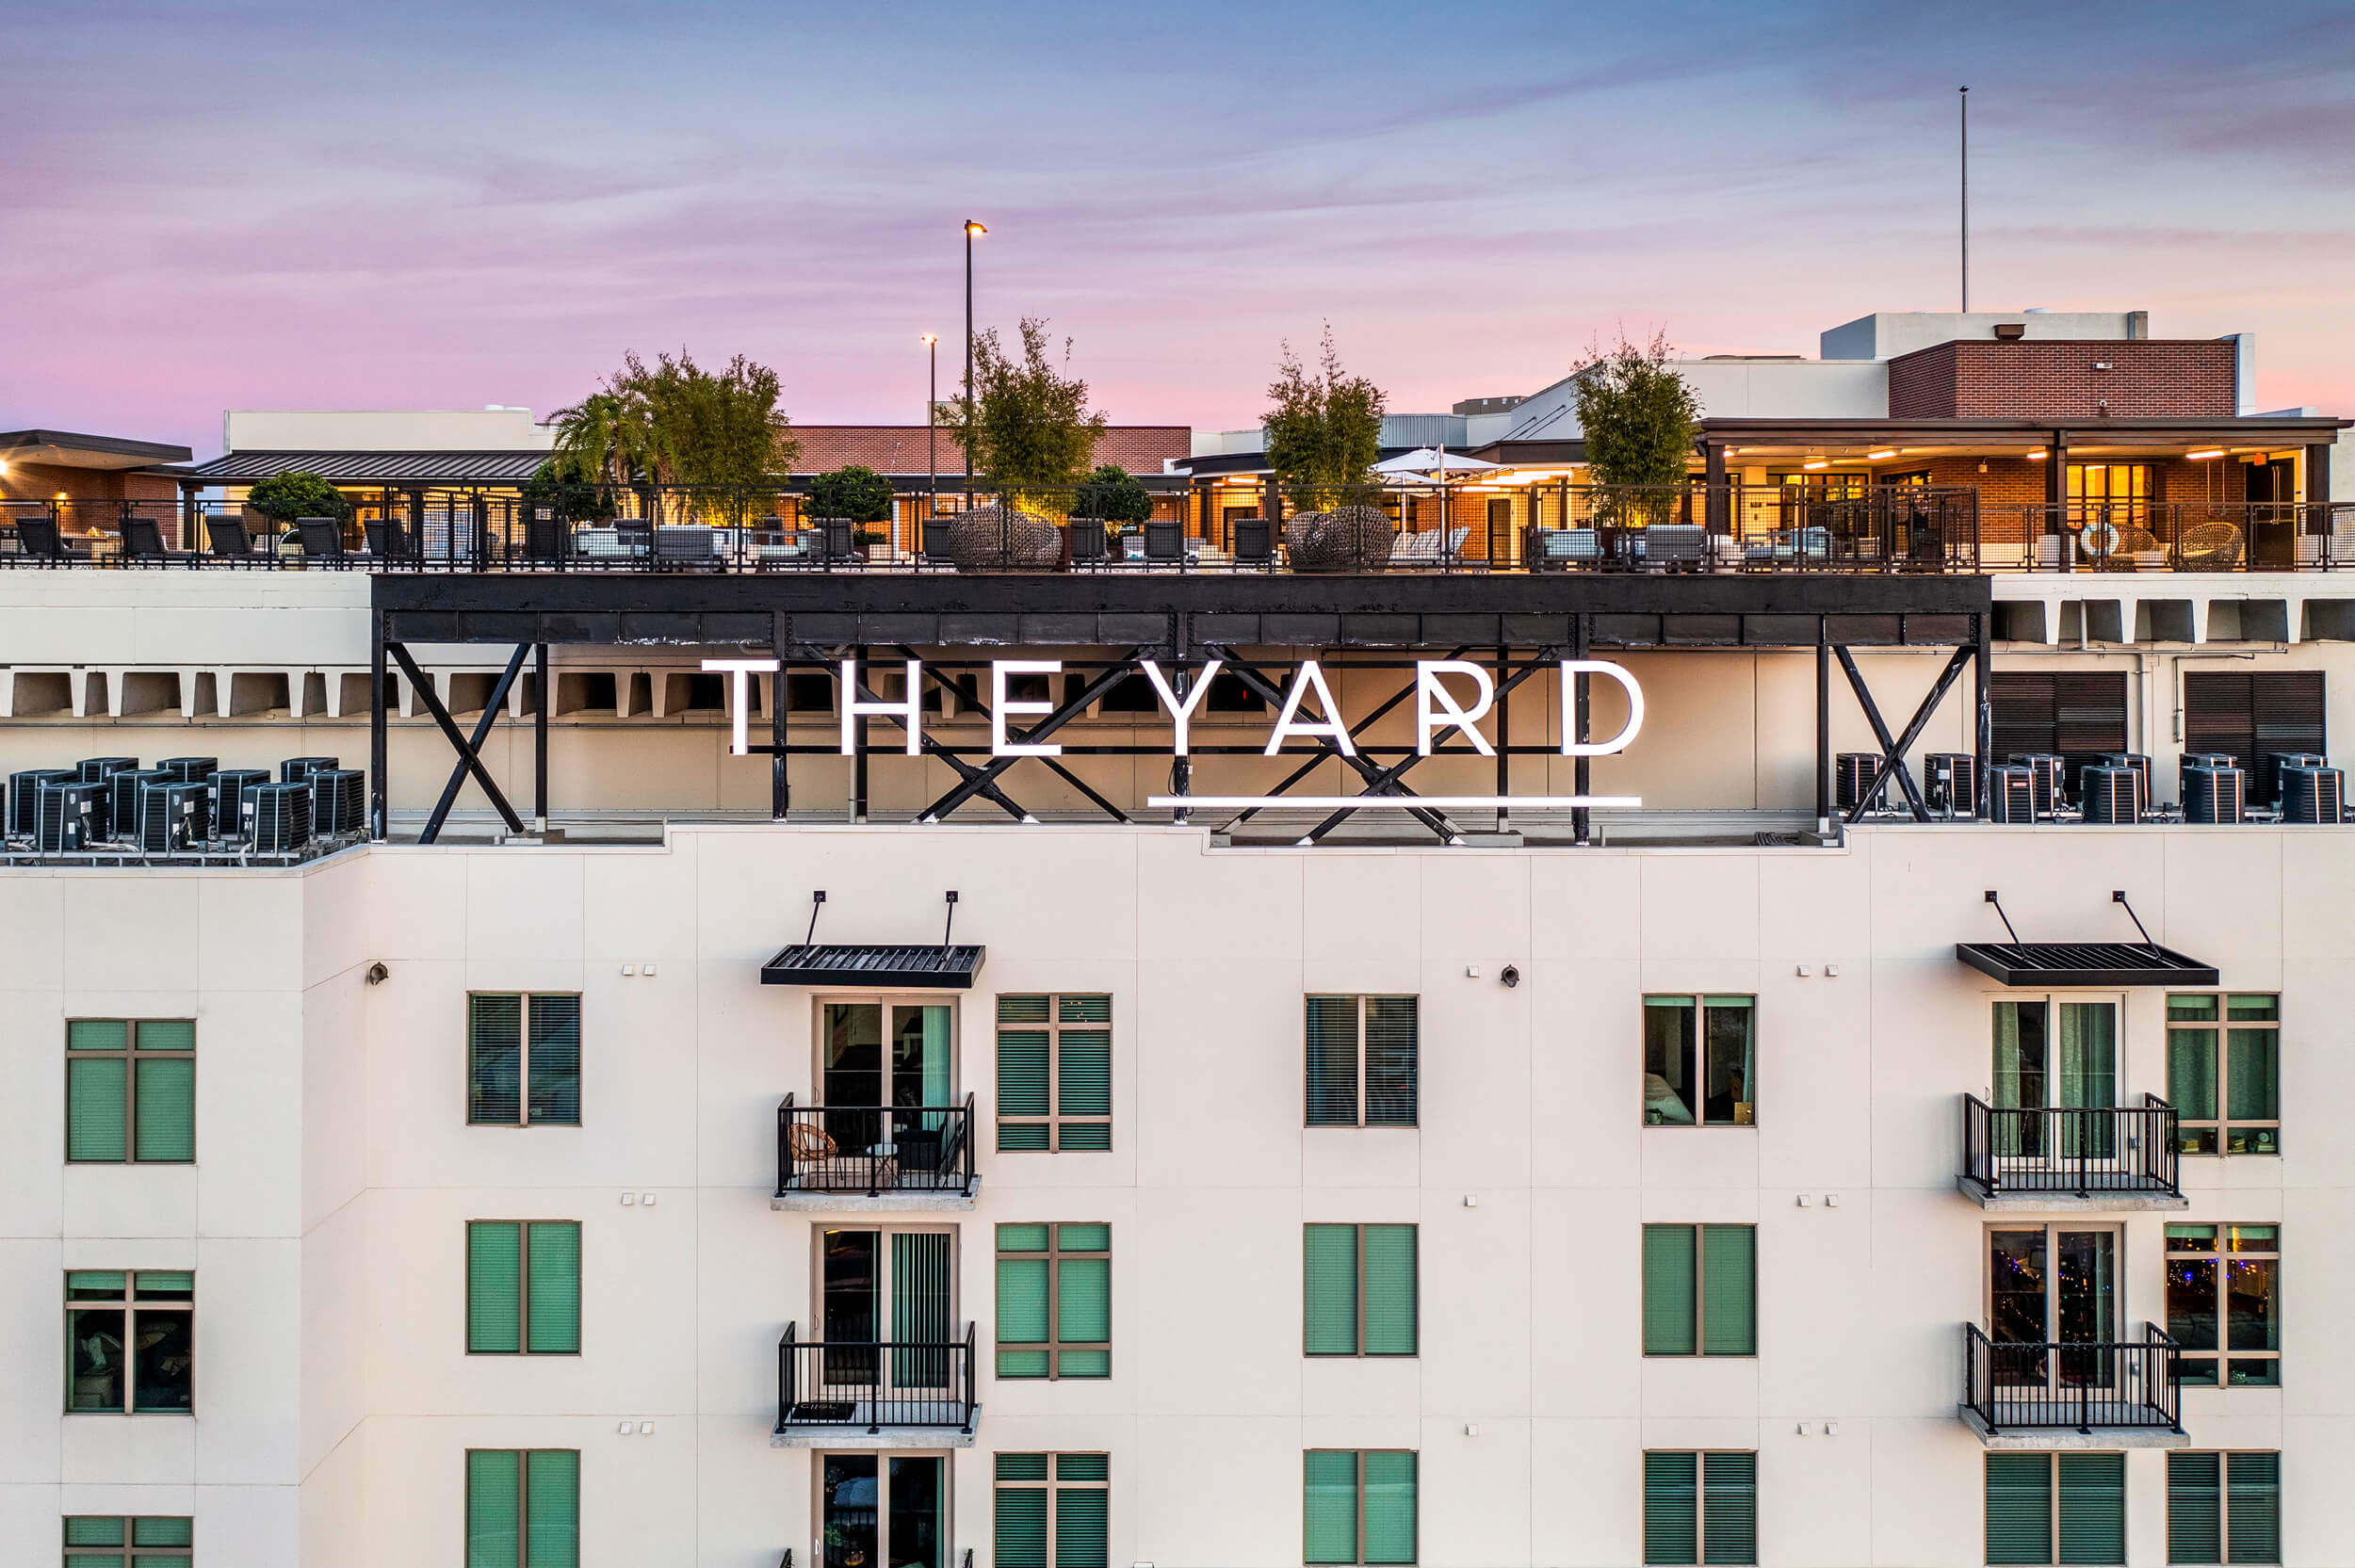 Upcoming Mixed Use Central Florida Community: The Yard at Ivanhoe